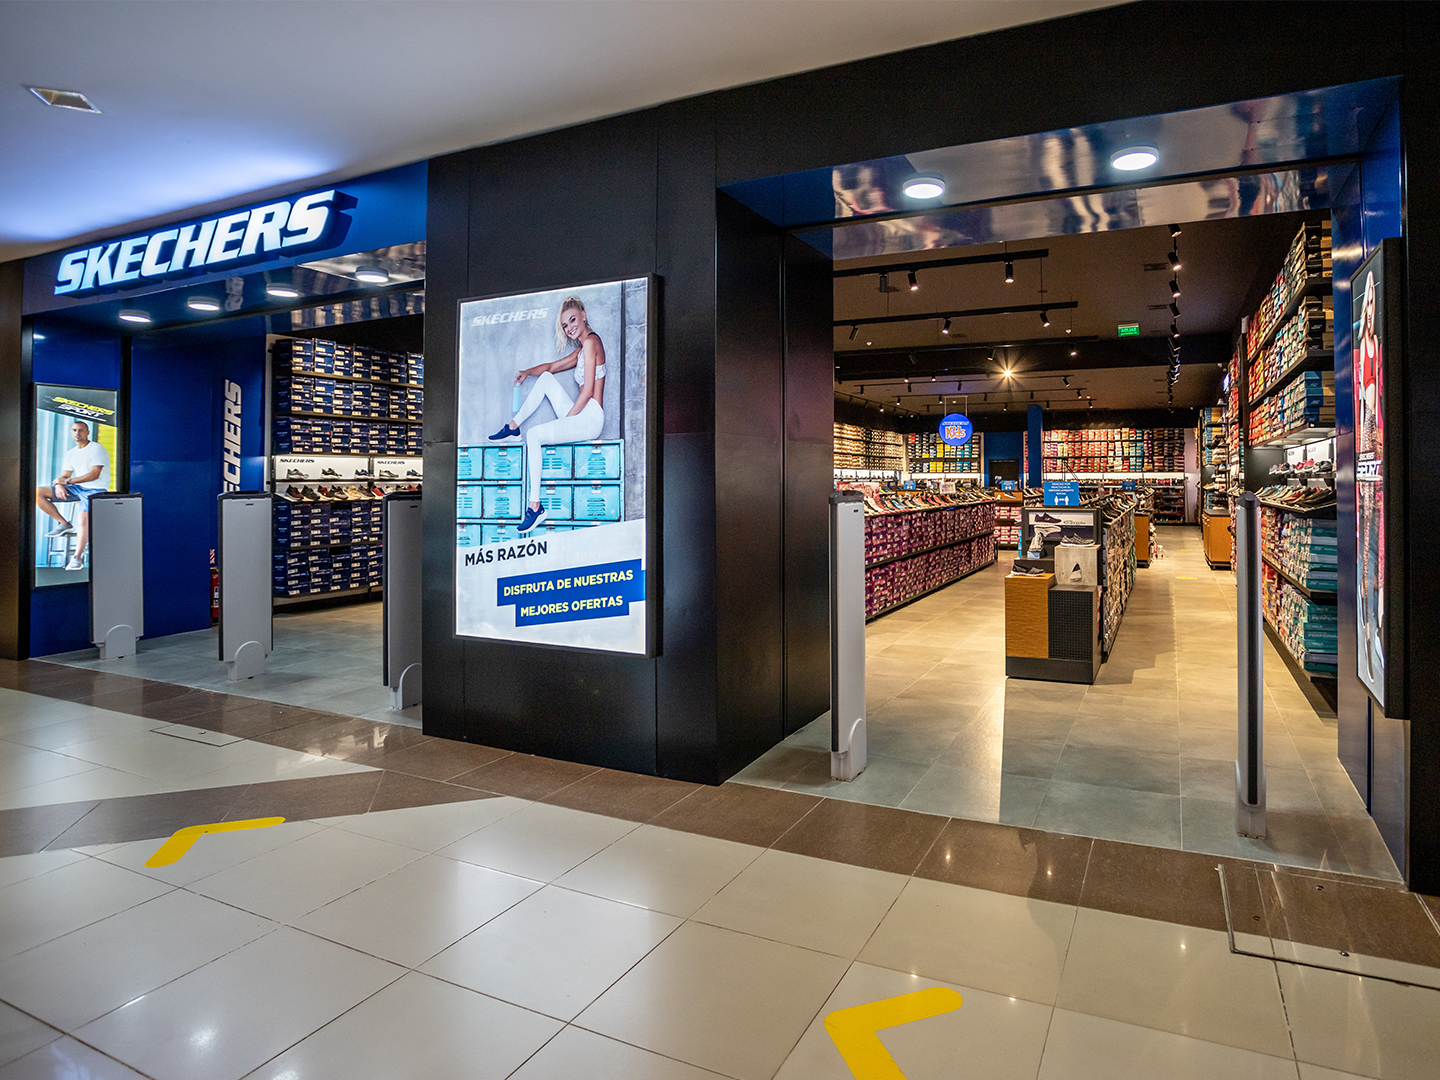 Skechers Store Design - Store Display - Visual Merchandising - Exterior Store Display